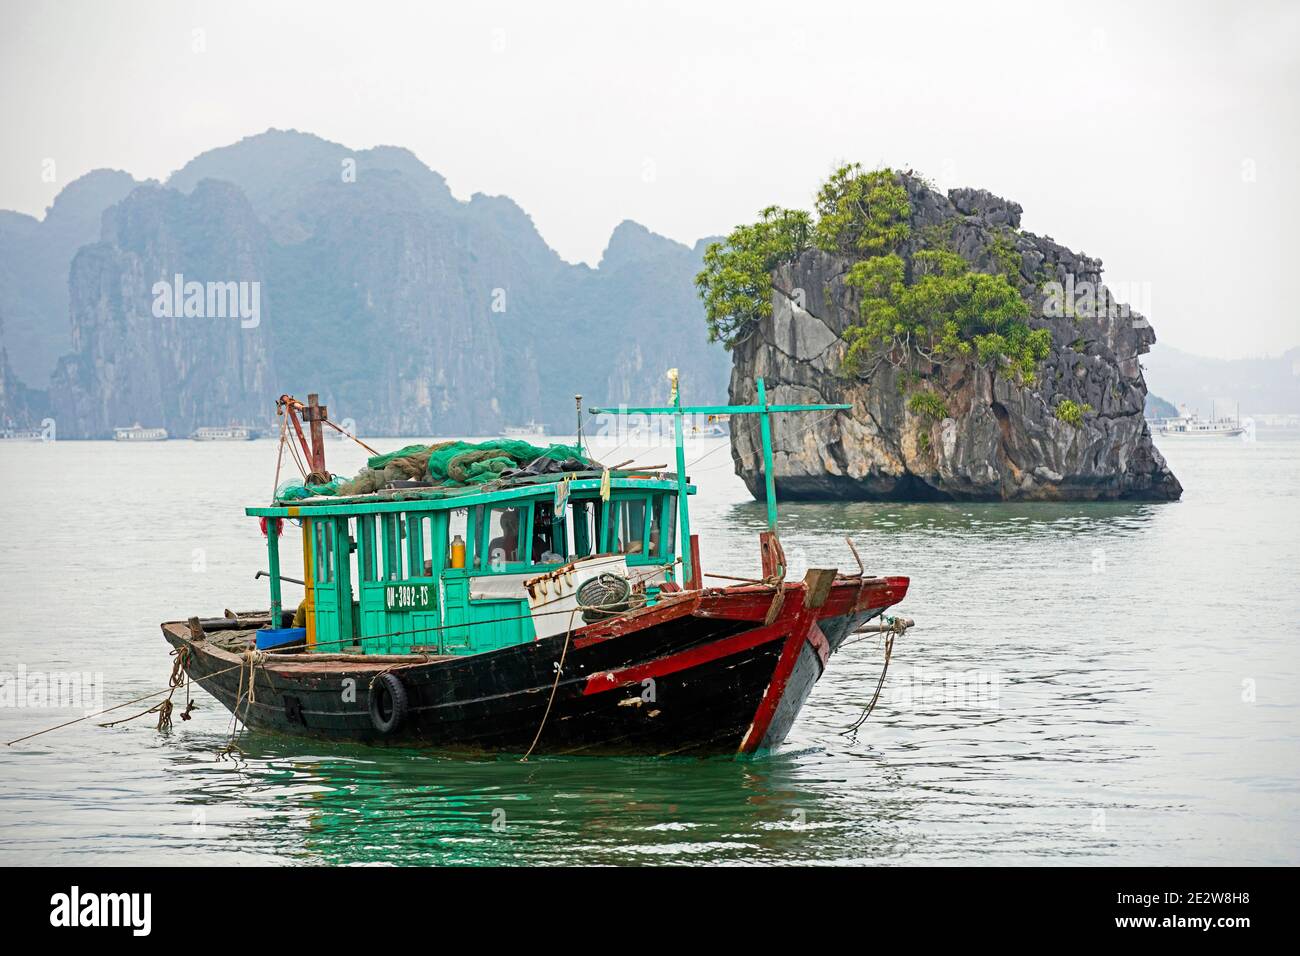 Wooden fishing boat and limestone monolithic islands in Ha Long Bay / Halong Bay / Vinh Ha Long, Quang Ninh Province, Vietnam Stock Photo